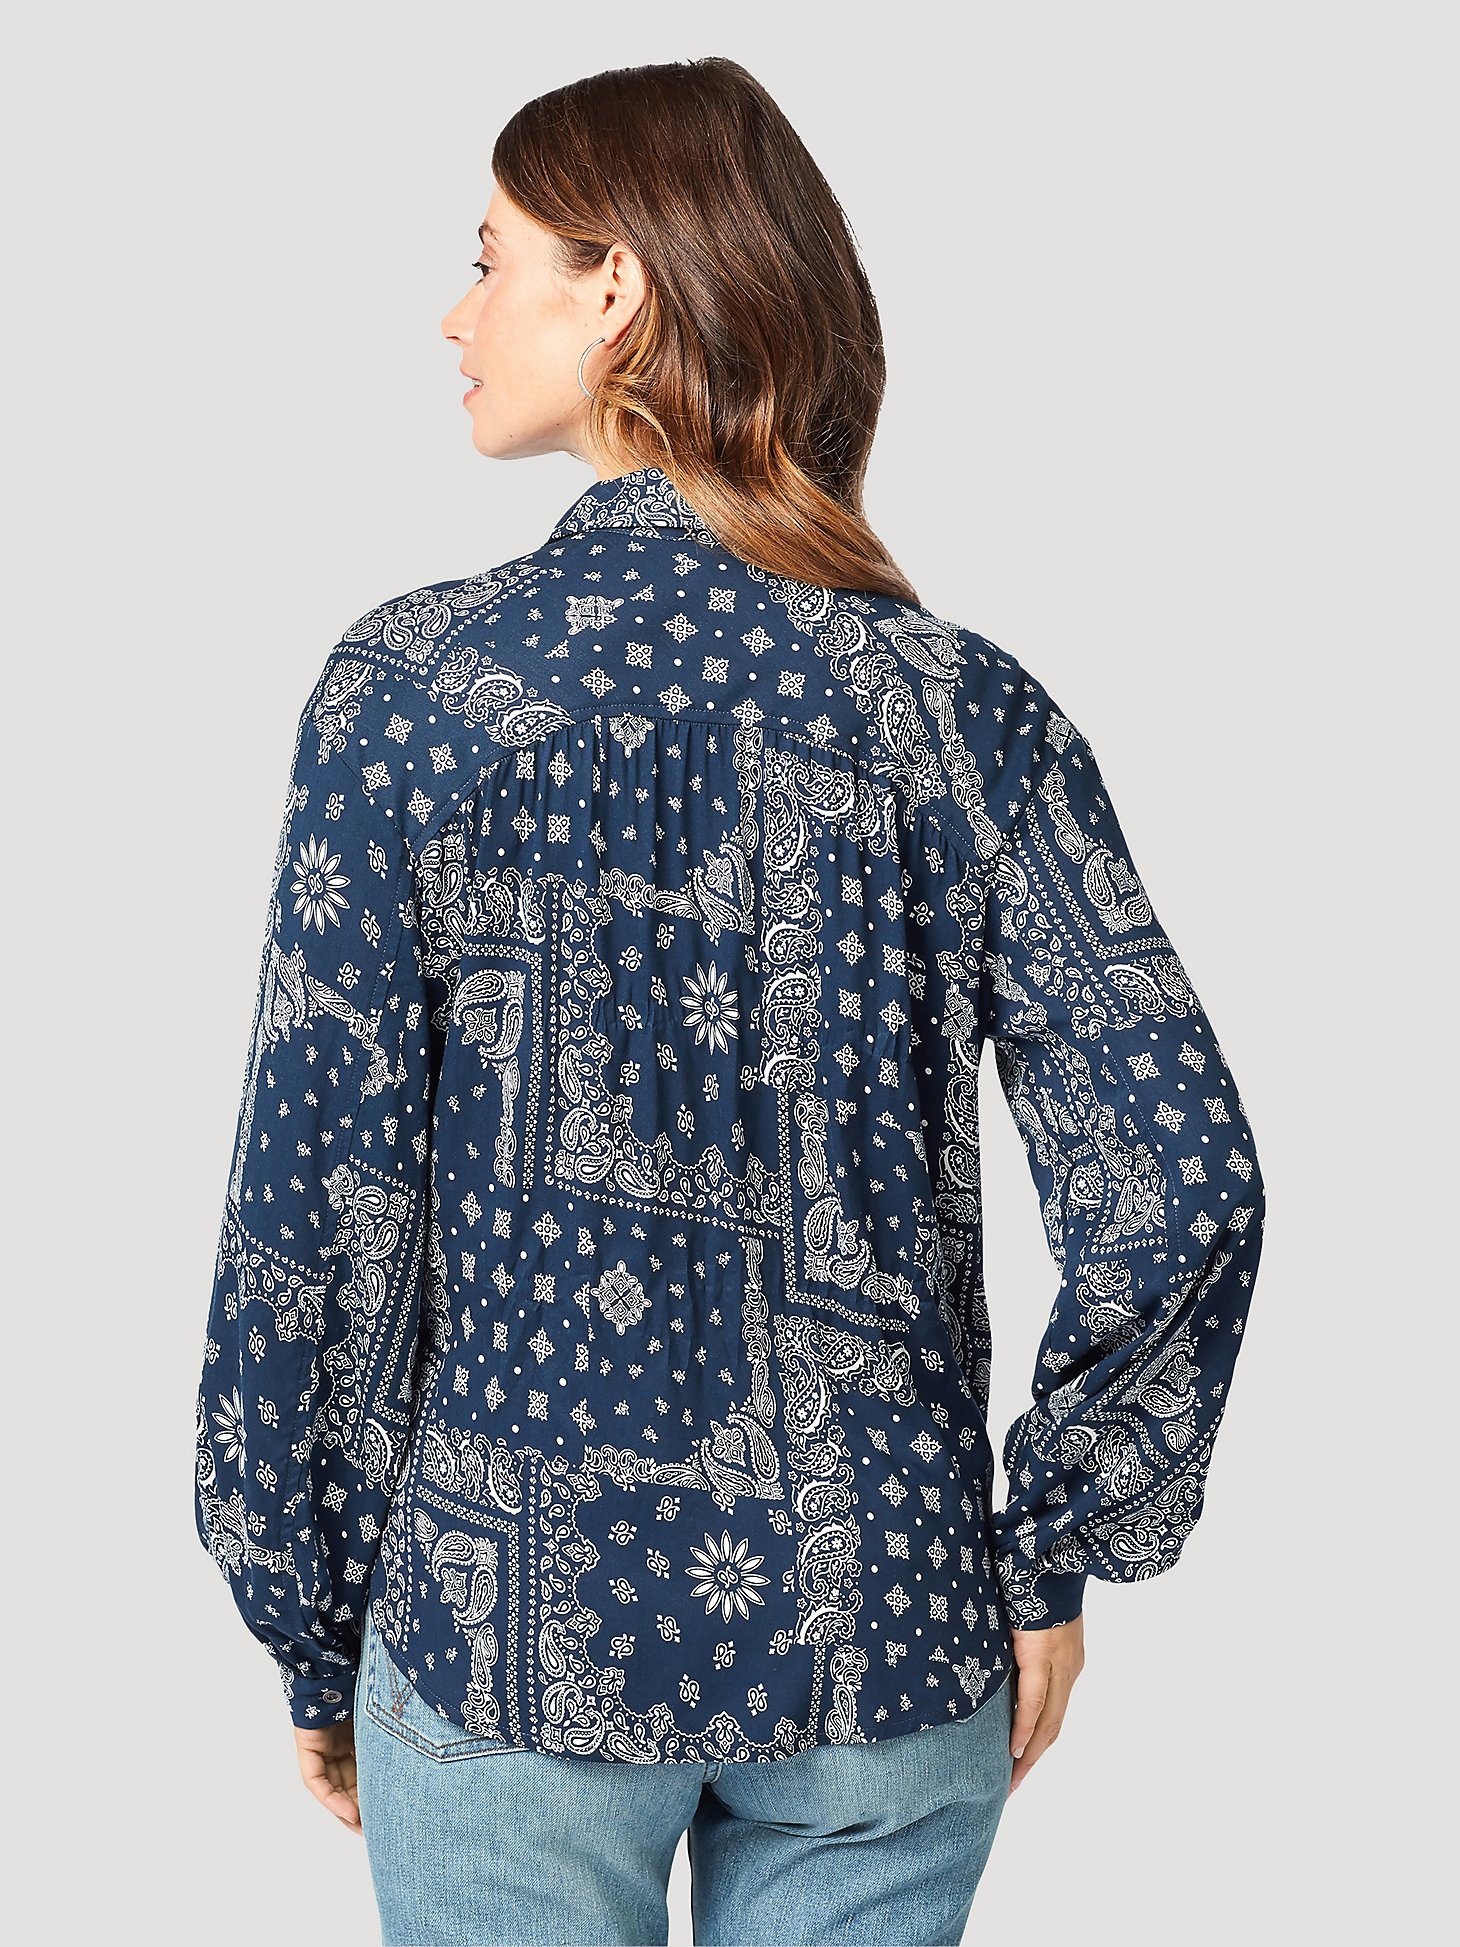 Women's Retro Patchwork Western Bloused Long Sleeve Shirt in Blueprint alternative view 3